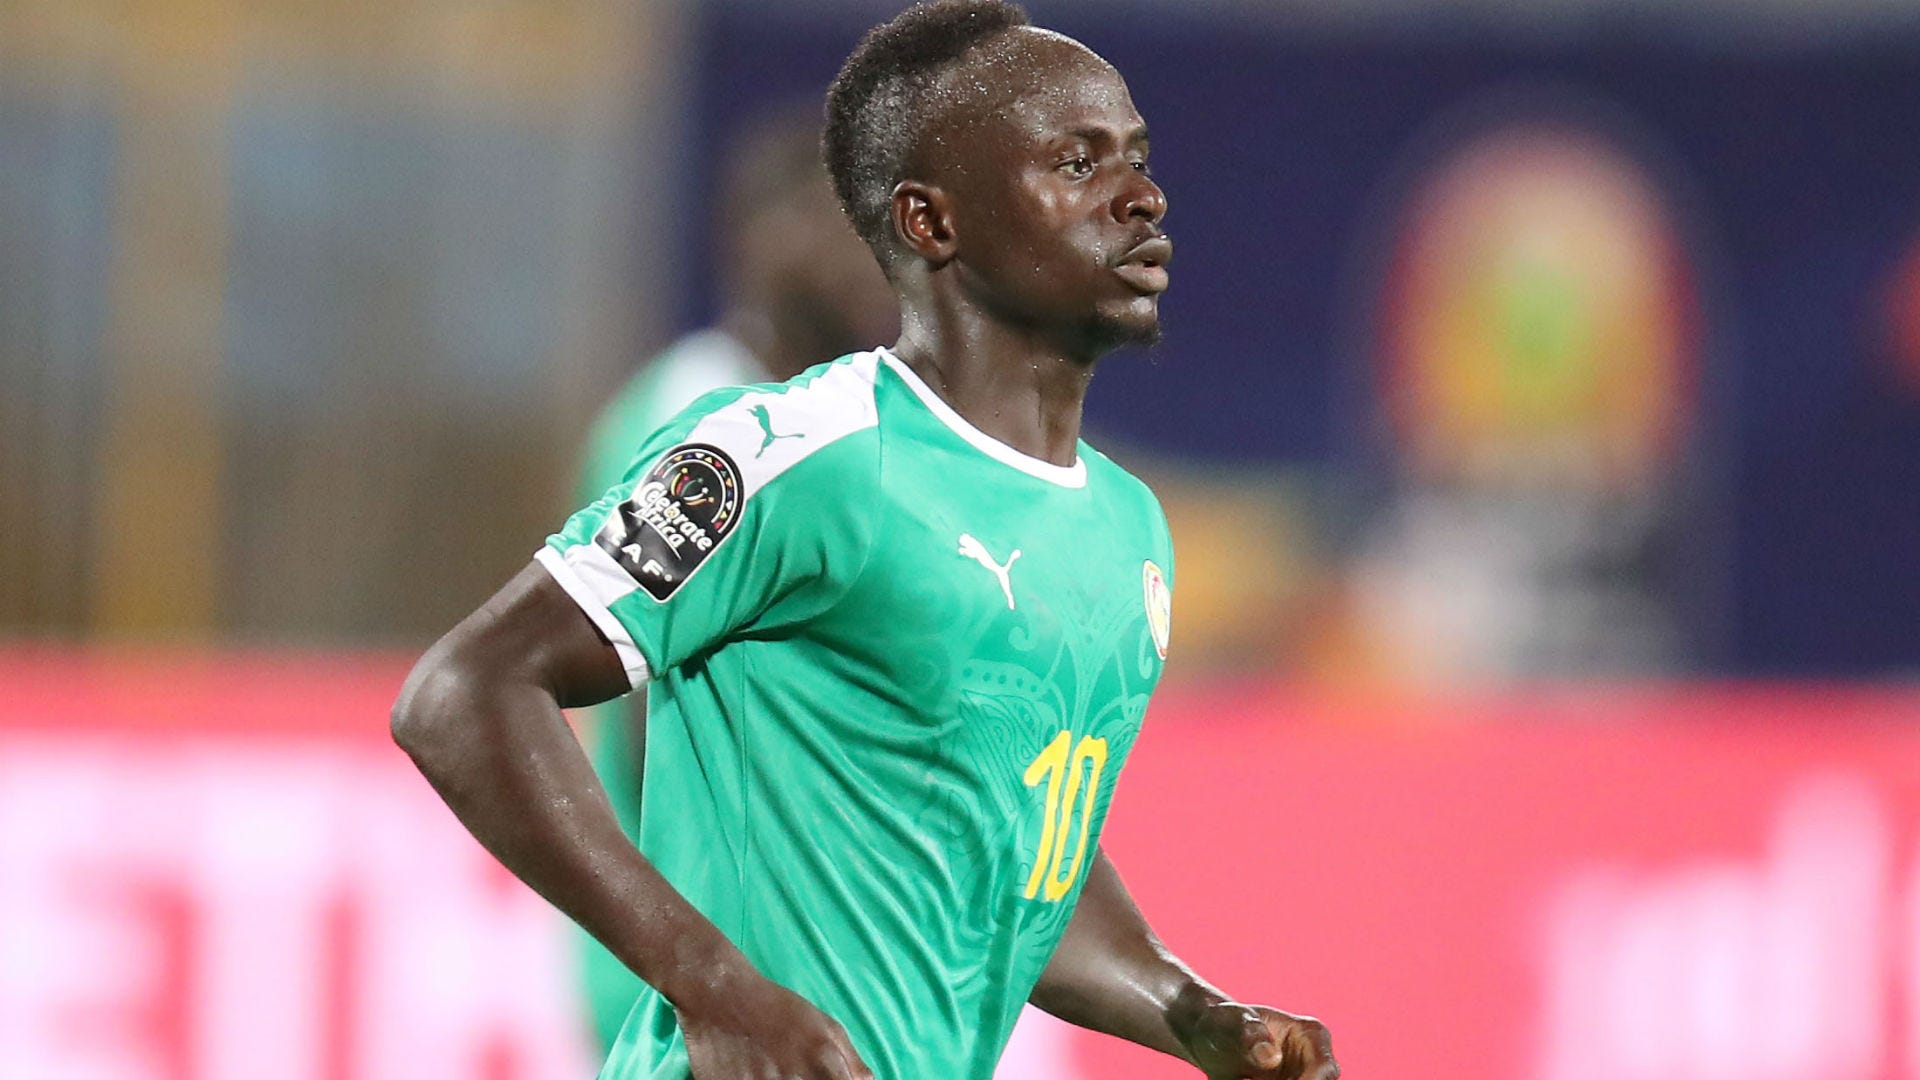 Sadio Mane of Senegal during the 2019 Africa Cup of Nations match between Kenya and Senegal.